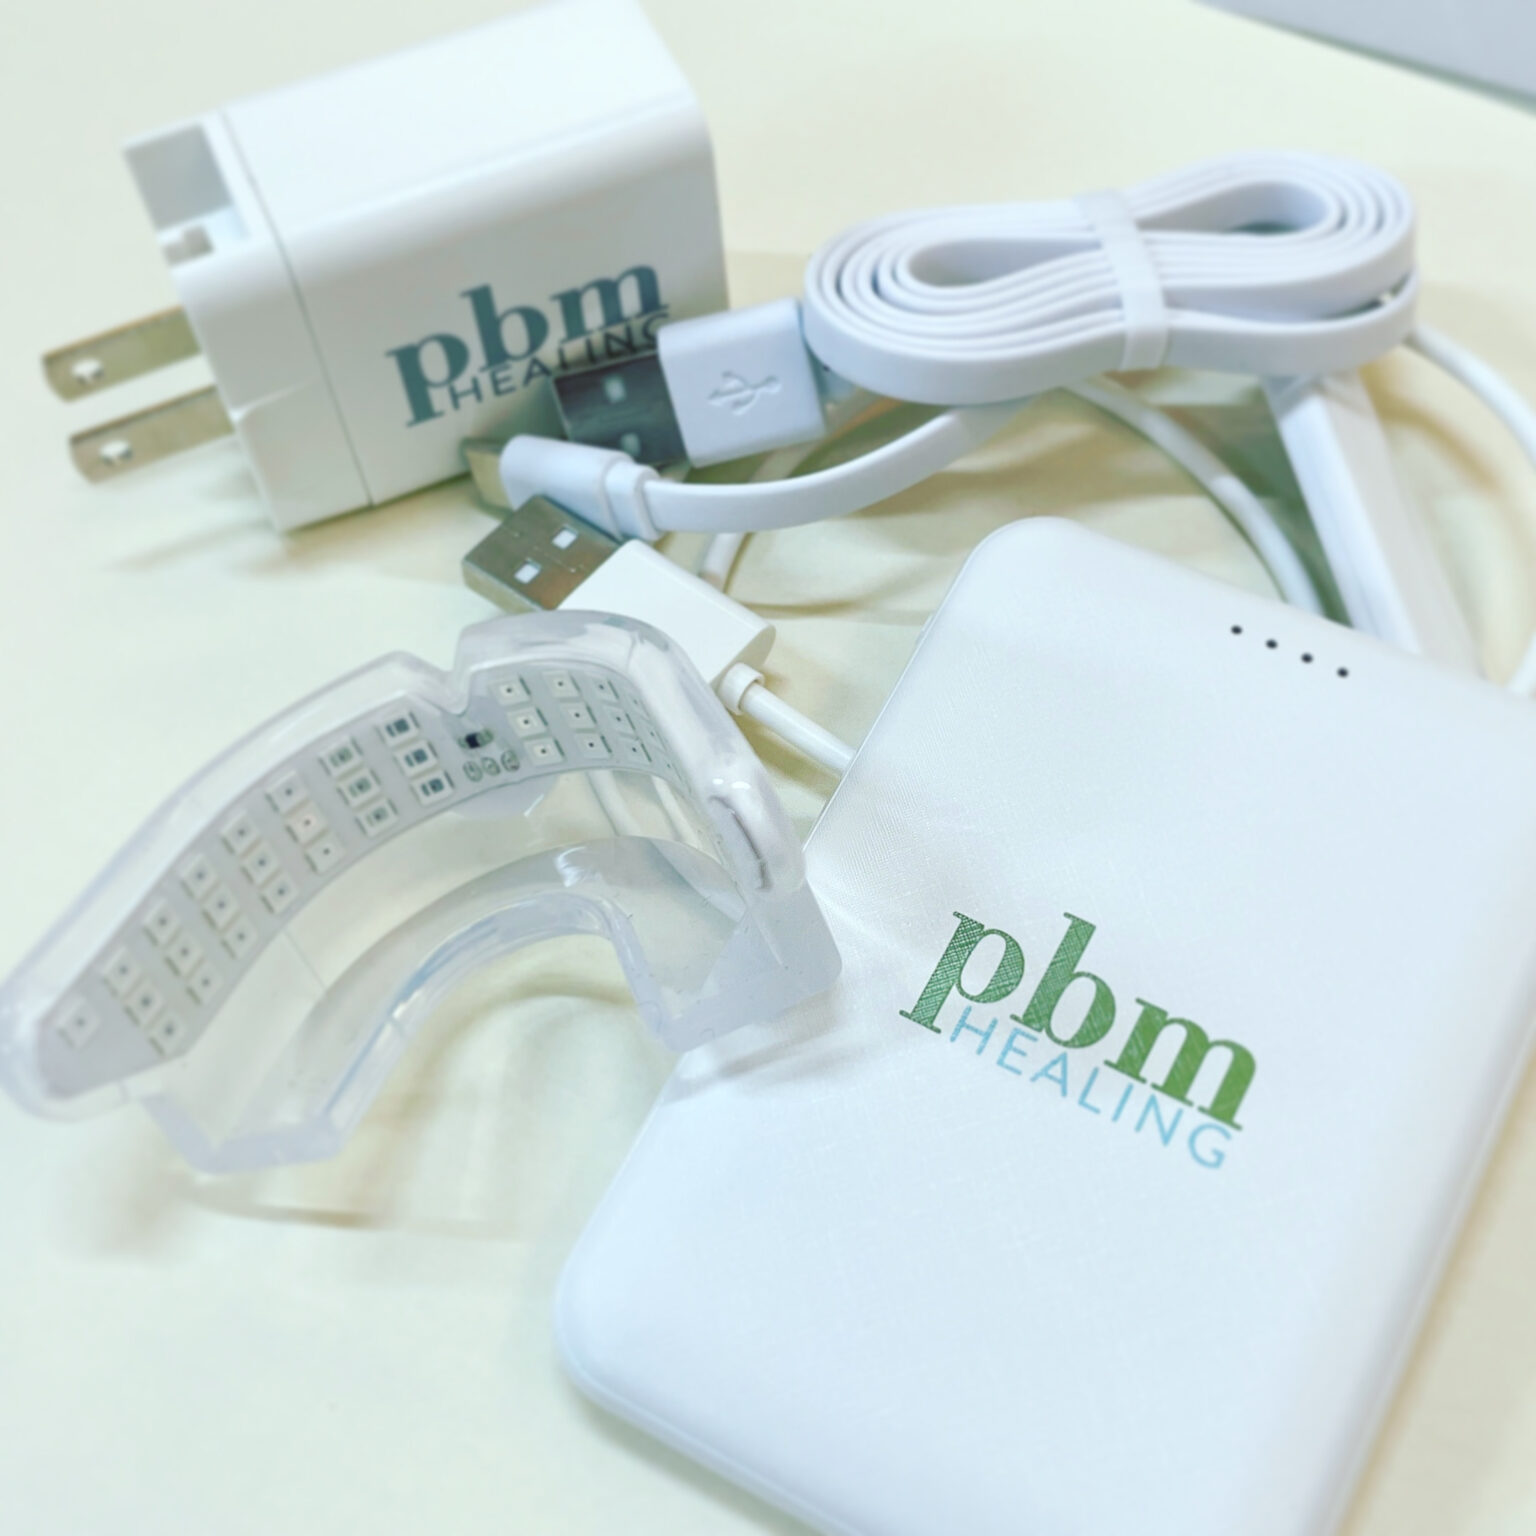 PBM healing 歯列矯正 光加速装置 - オーラルケア